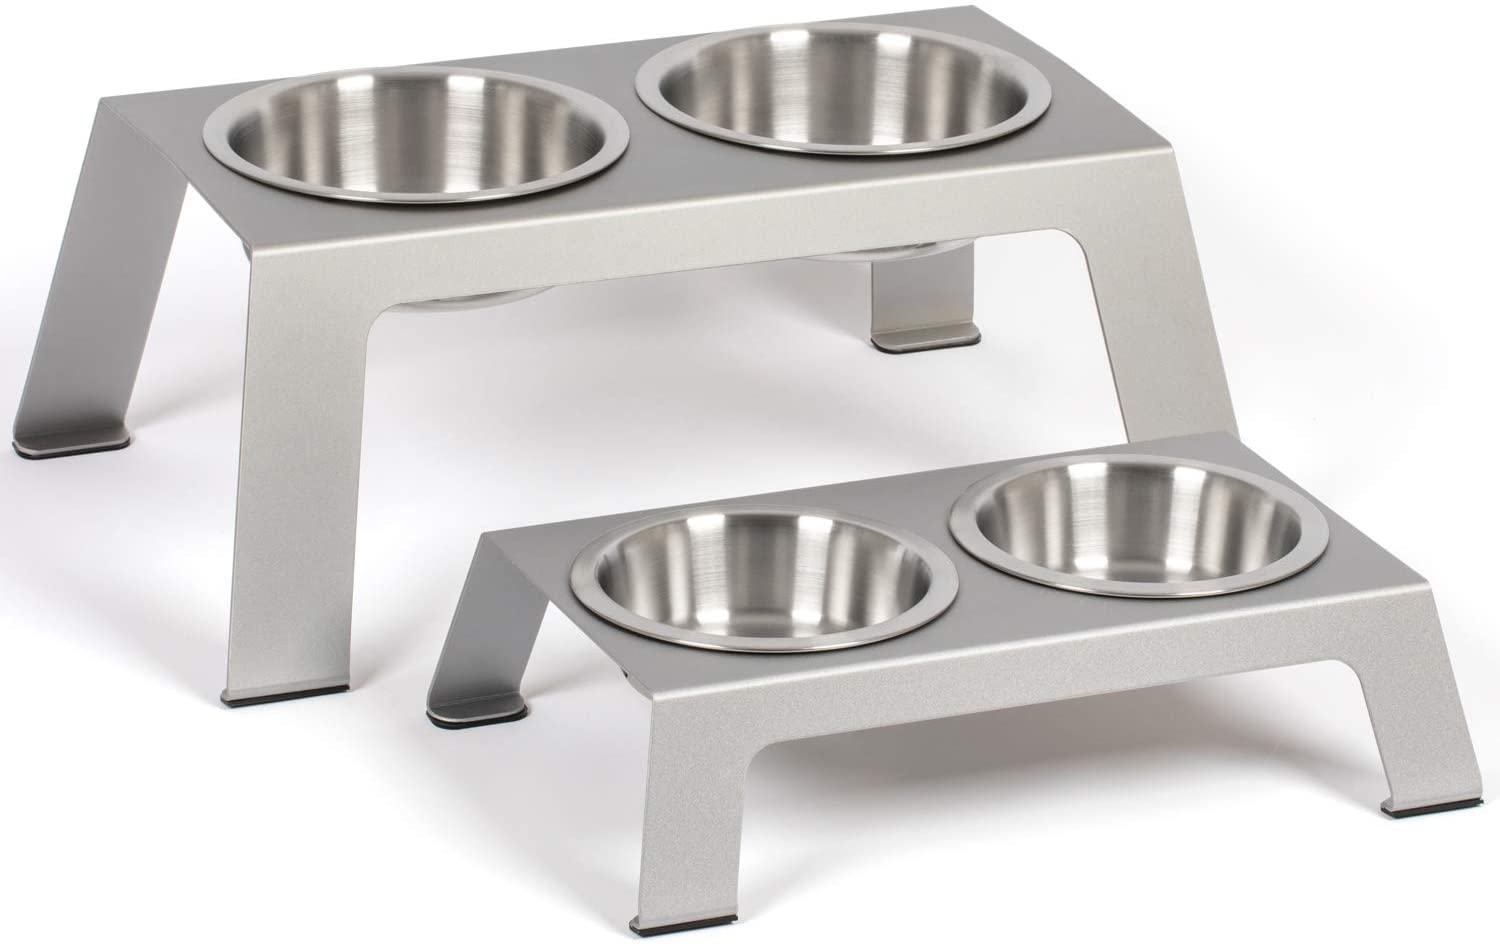 OurPets Comfort Diner Elevated Dog Food Dish (Raised Dog Bowls